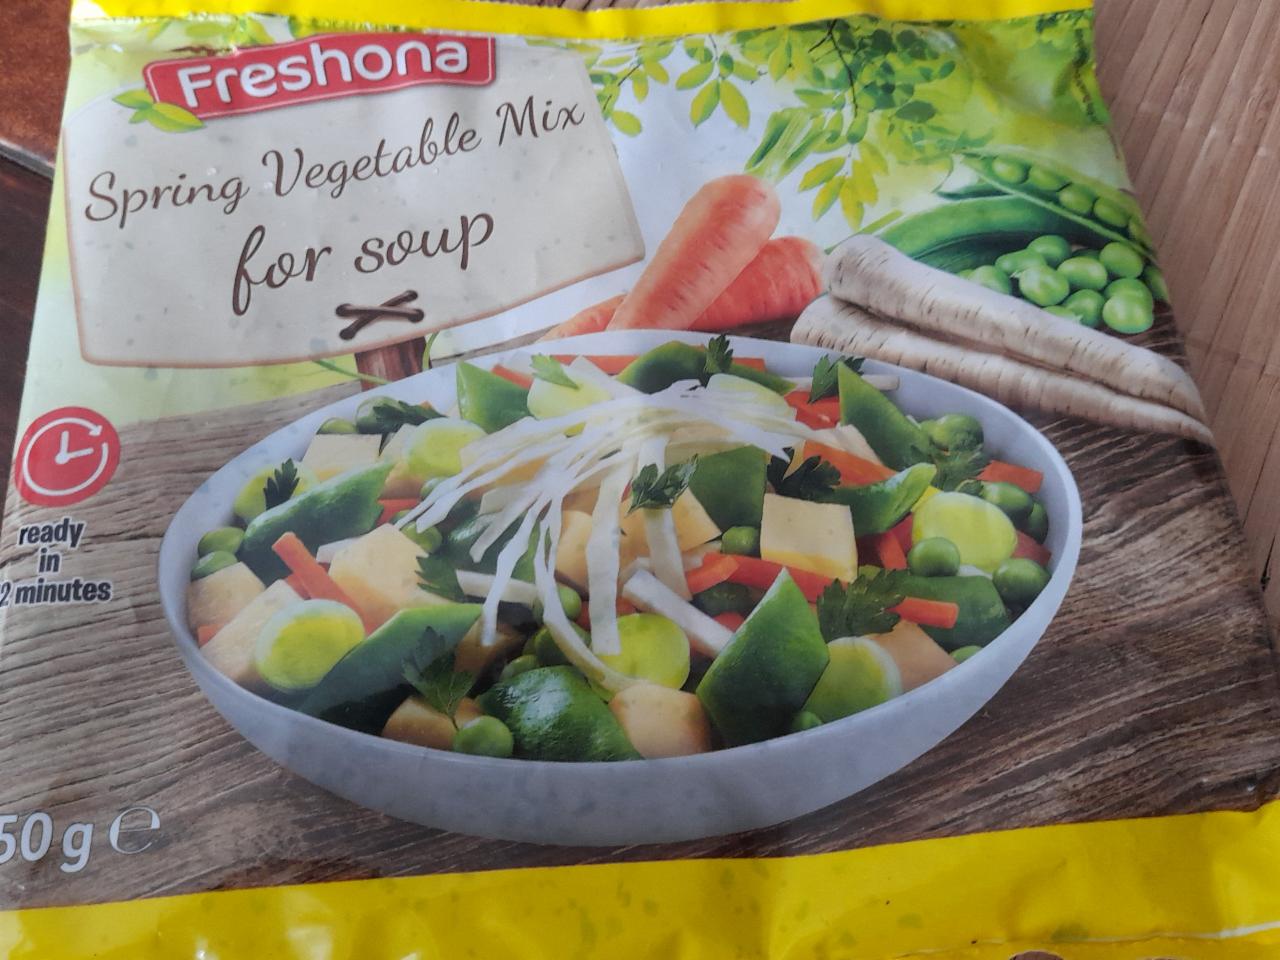 Fotografie - Spring vegetable mix for soup Freshona